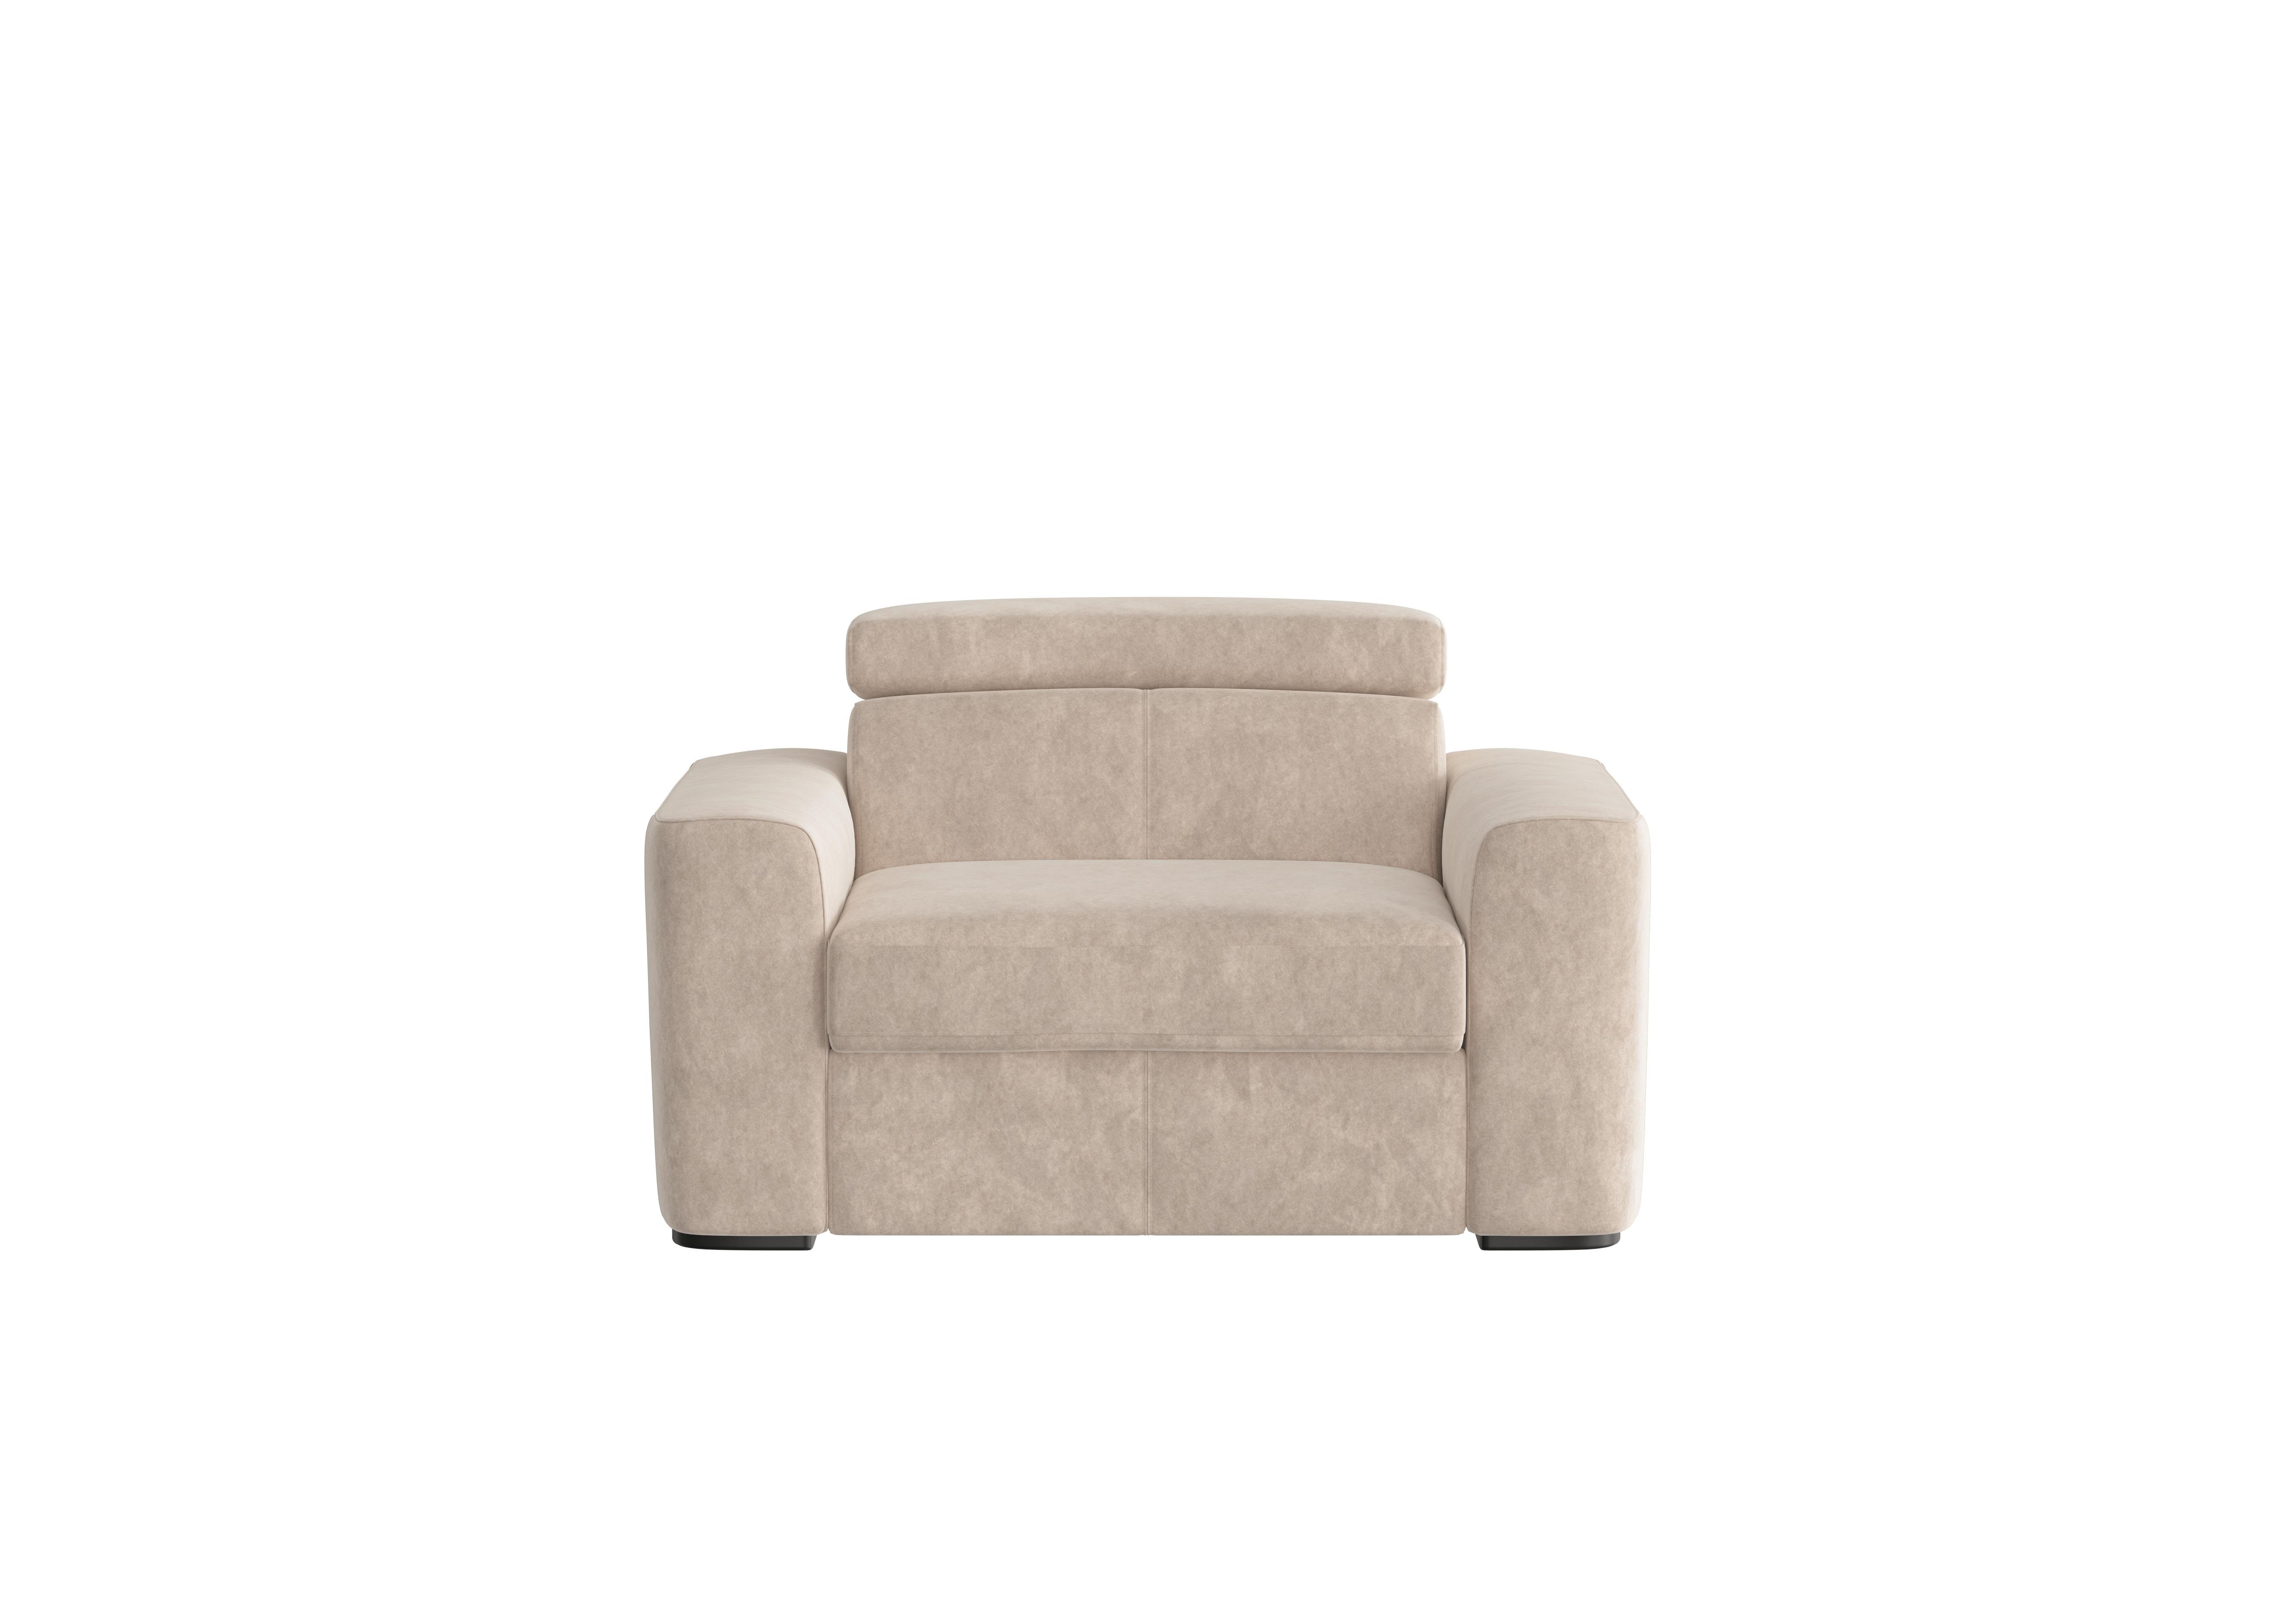 Infinity Fabric Chair Sofa Bed in Bfa-Bnn-R26 Fv2 Cream on Furniture Village